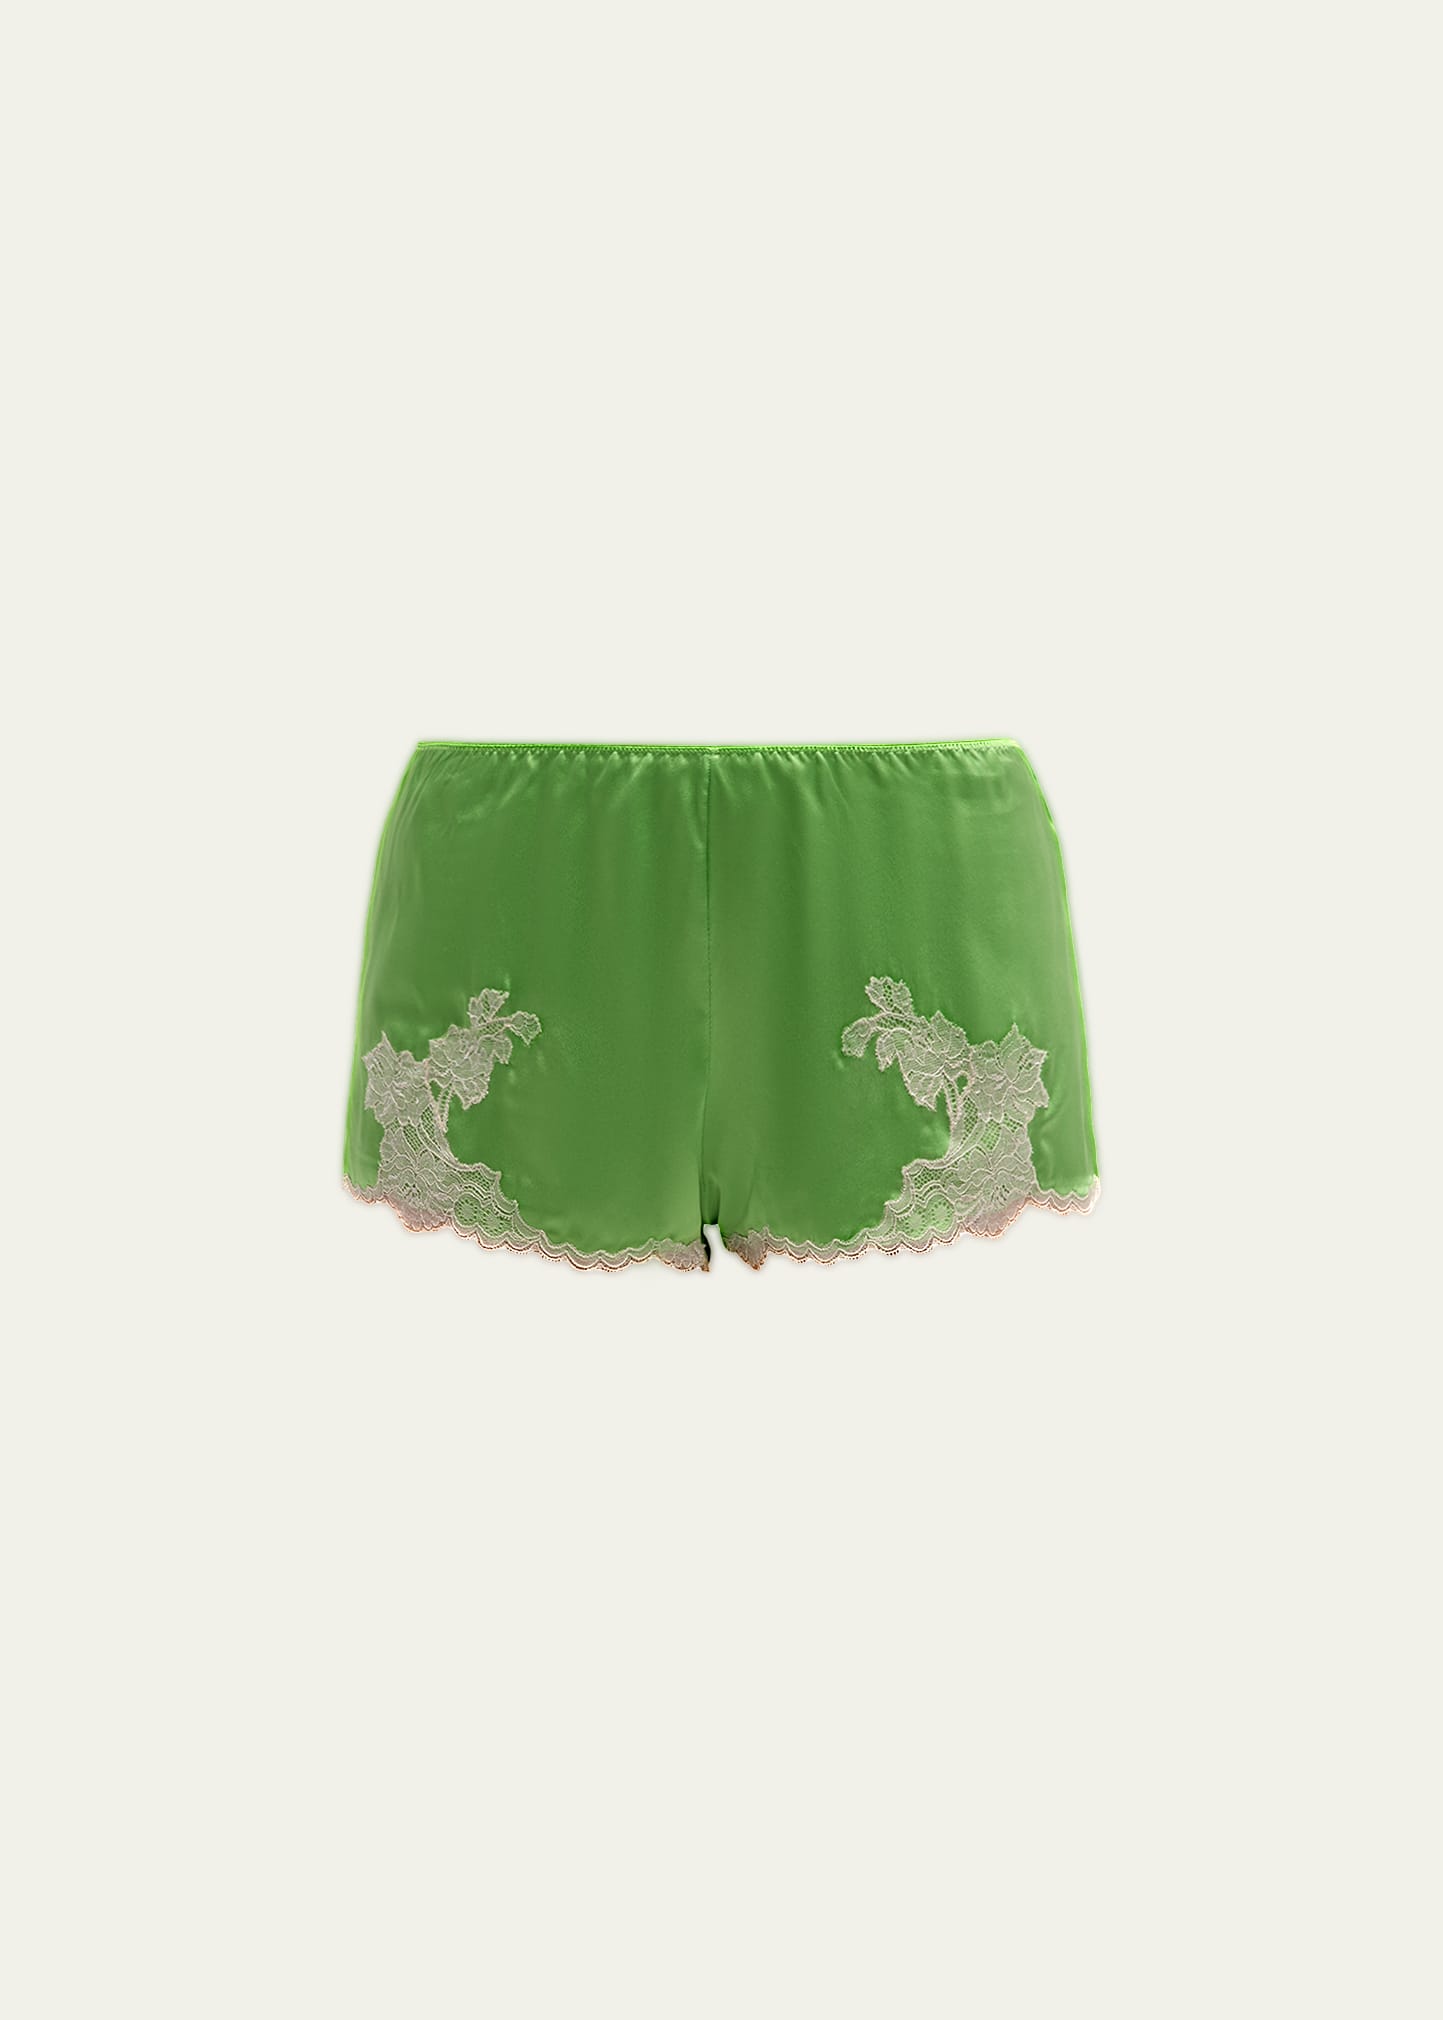 Josie Natori Lolita Lace-Trim Silk Shorts